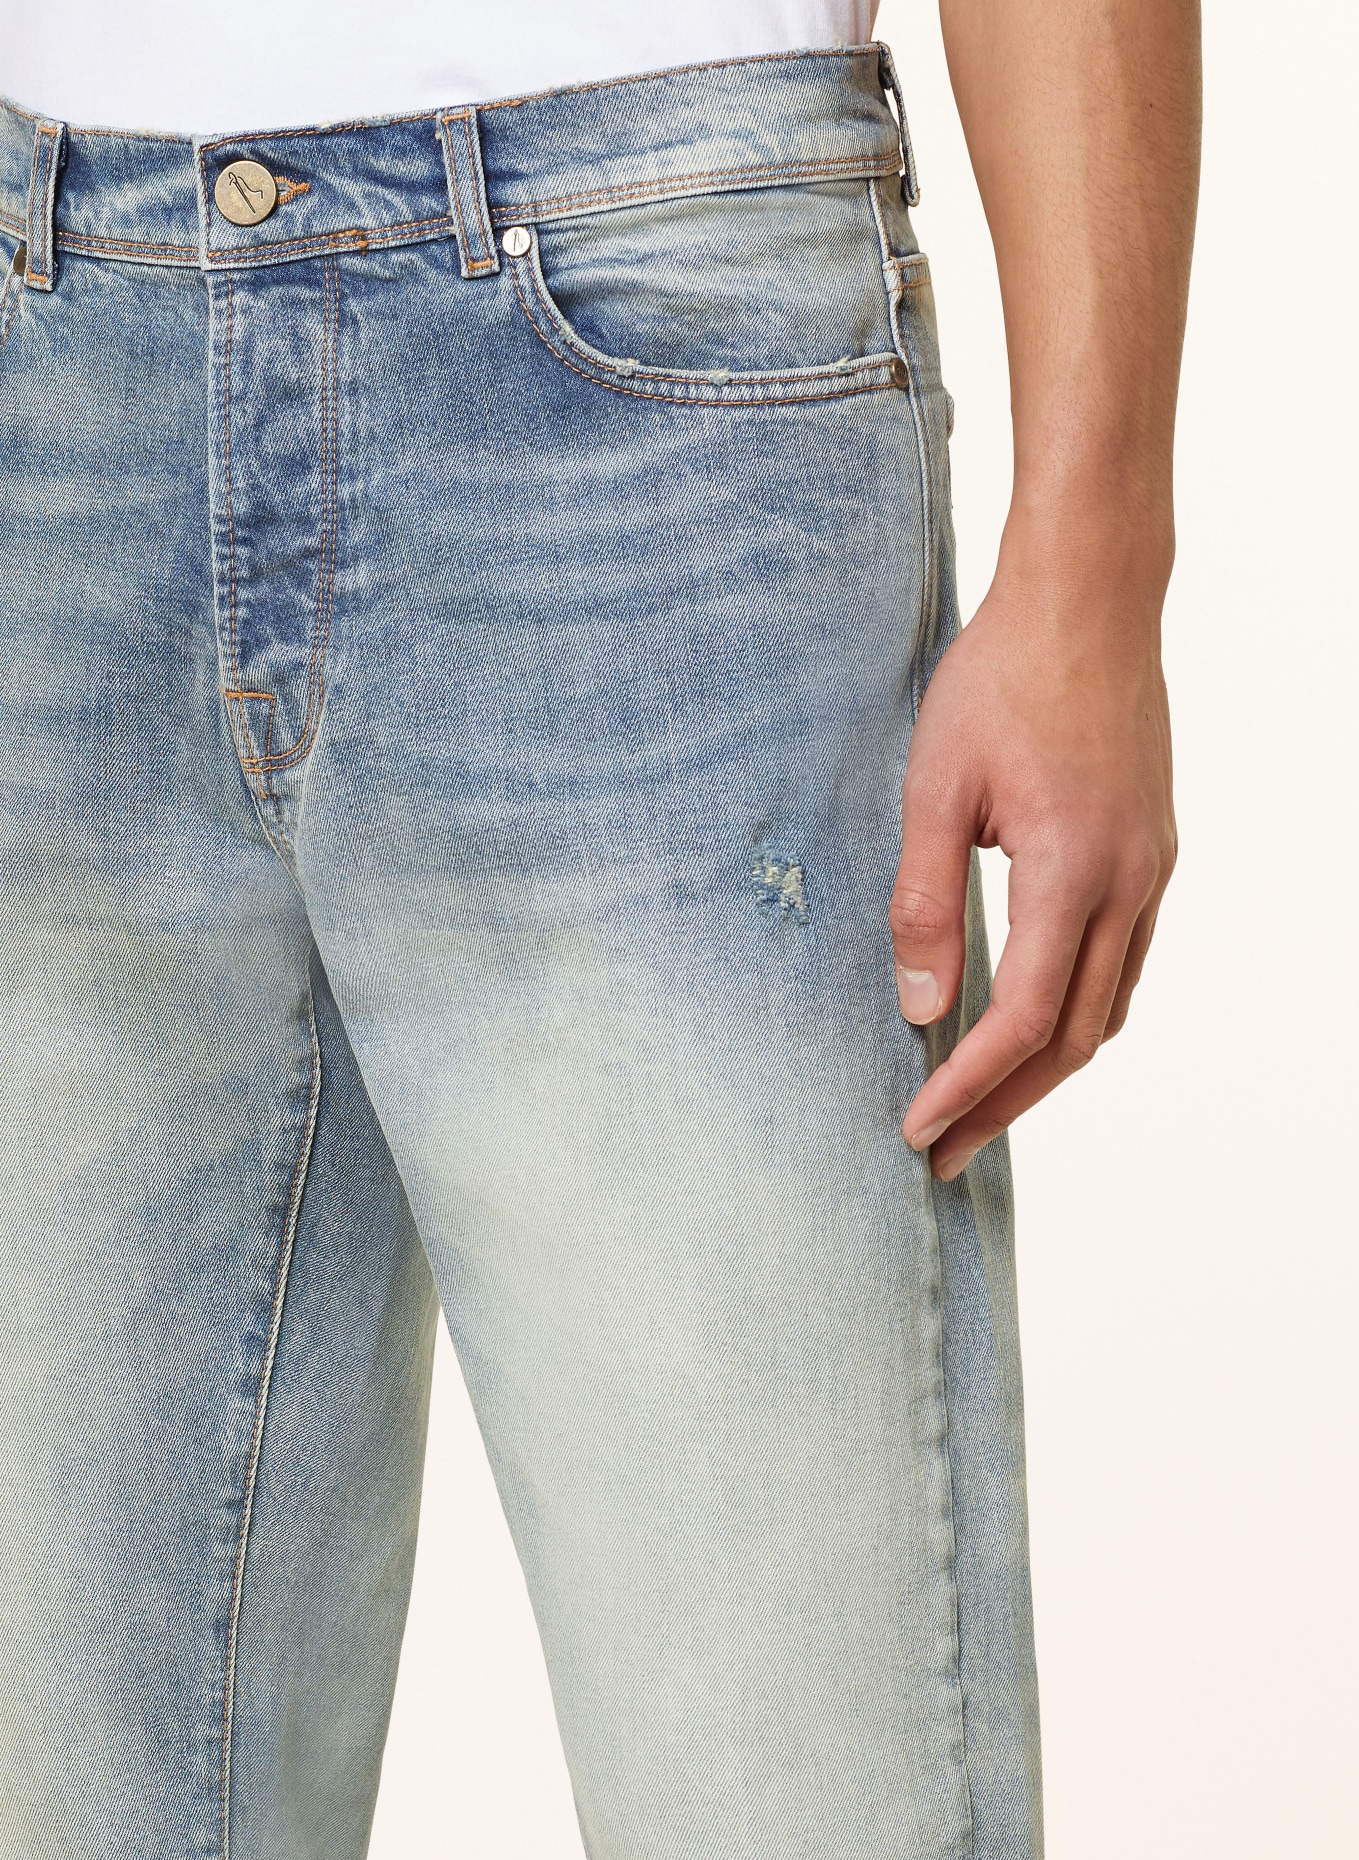 GOLDGARN DENIM Jeans RHEINAU Relaxed Cropped Fit, Farbe: 1010 Vintageblue (Bild 5)